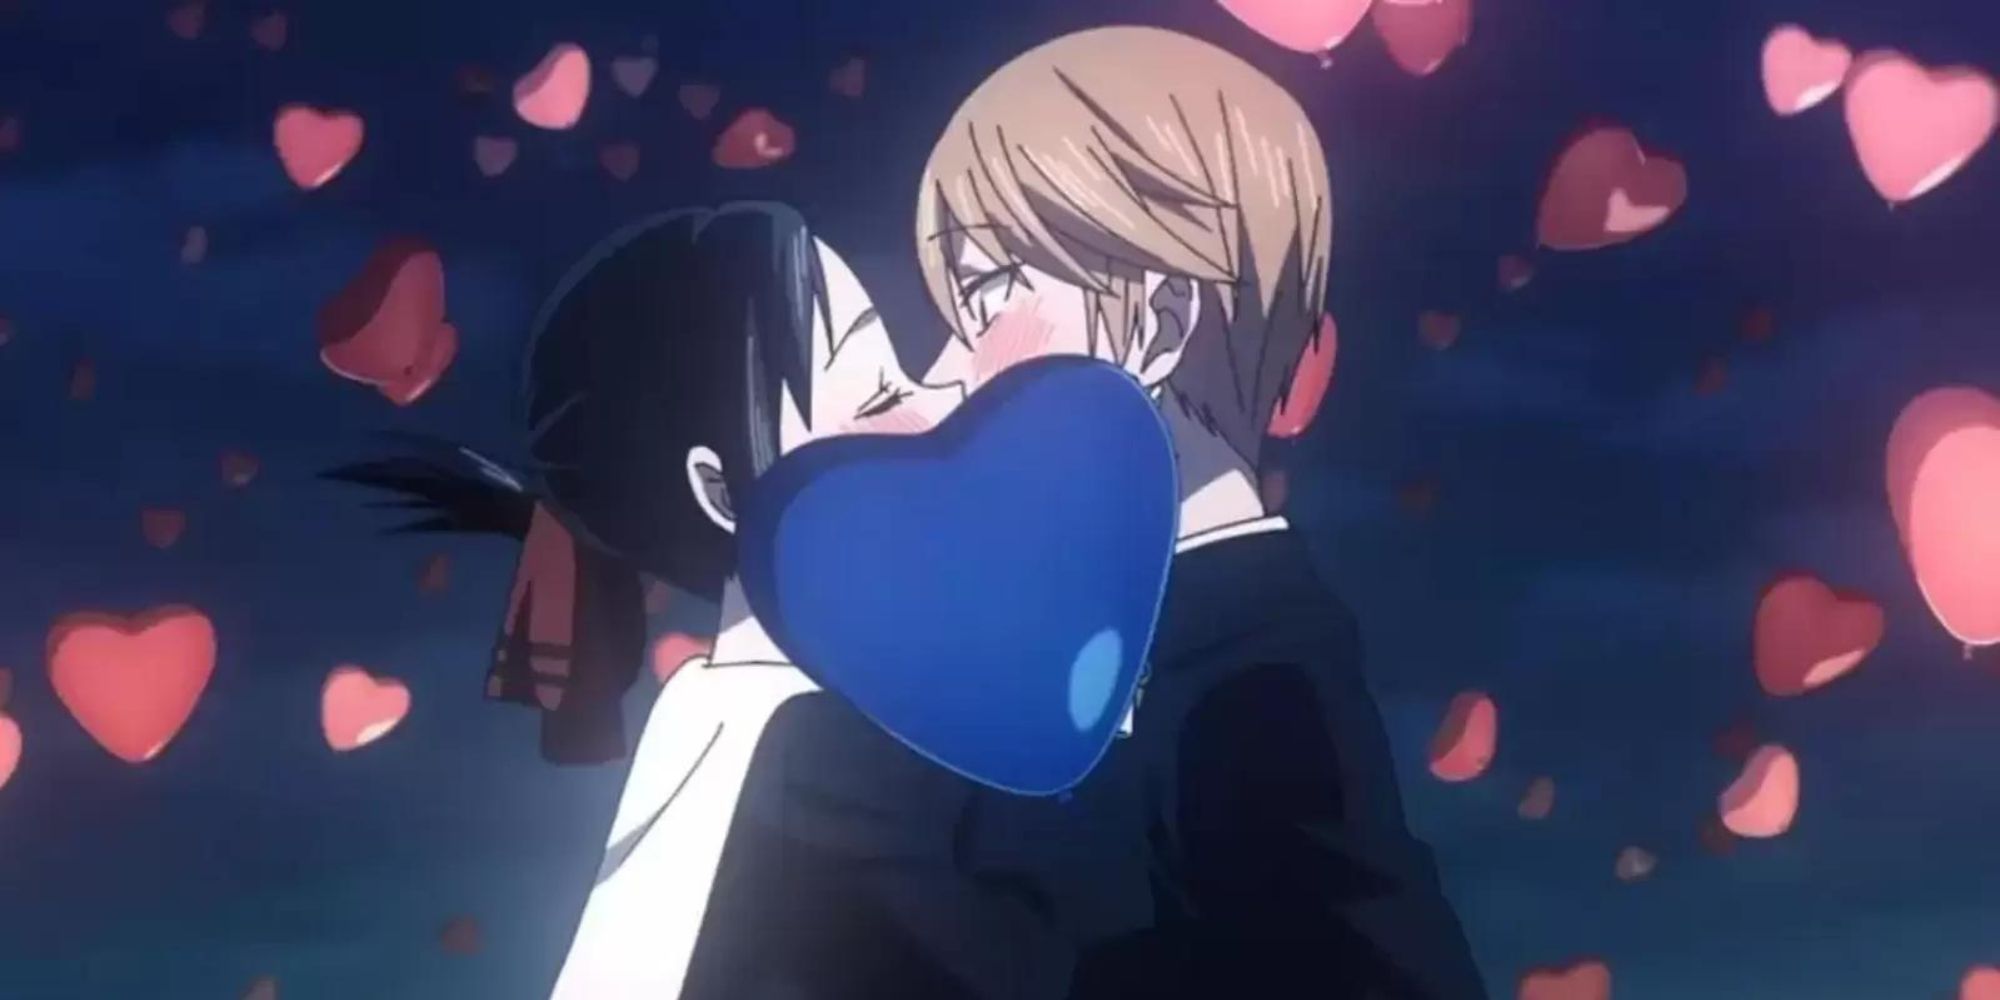 emo anime boy kissing anime girl with brown short cu...